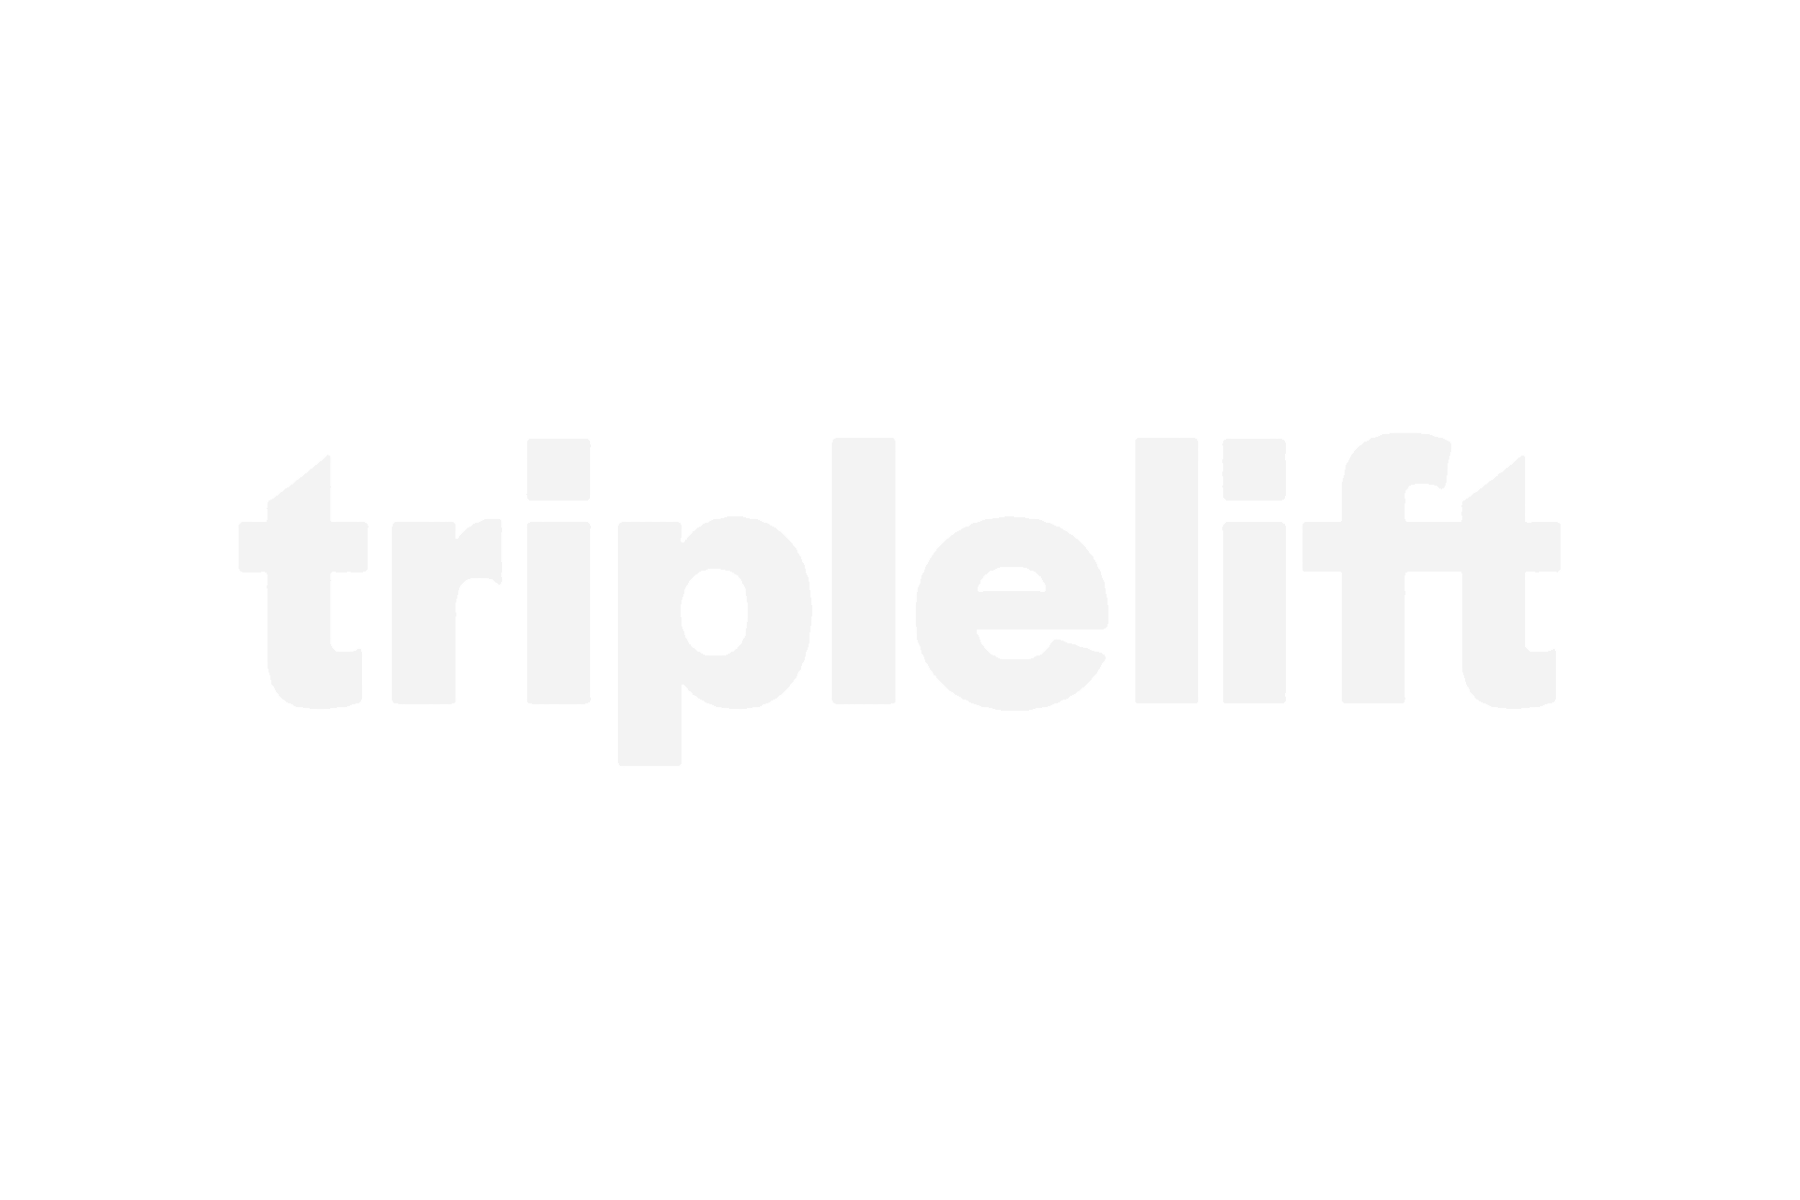 Triplelift (Copy) (Copy)